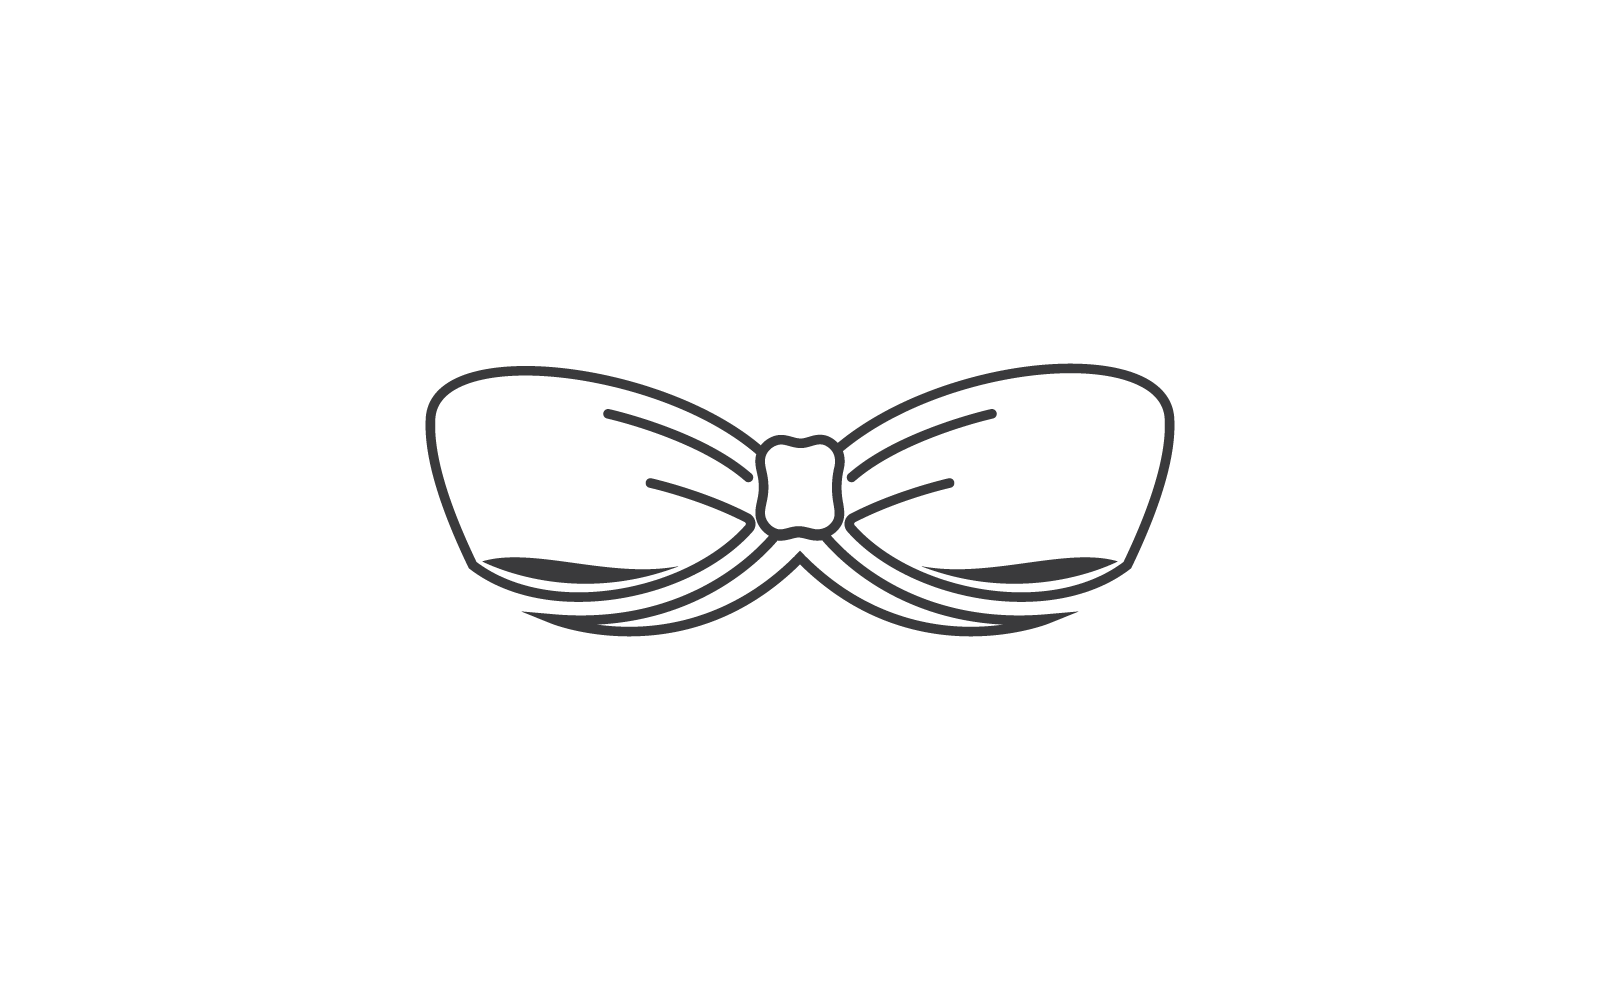 Bow tie icon vector design template